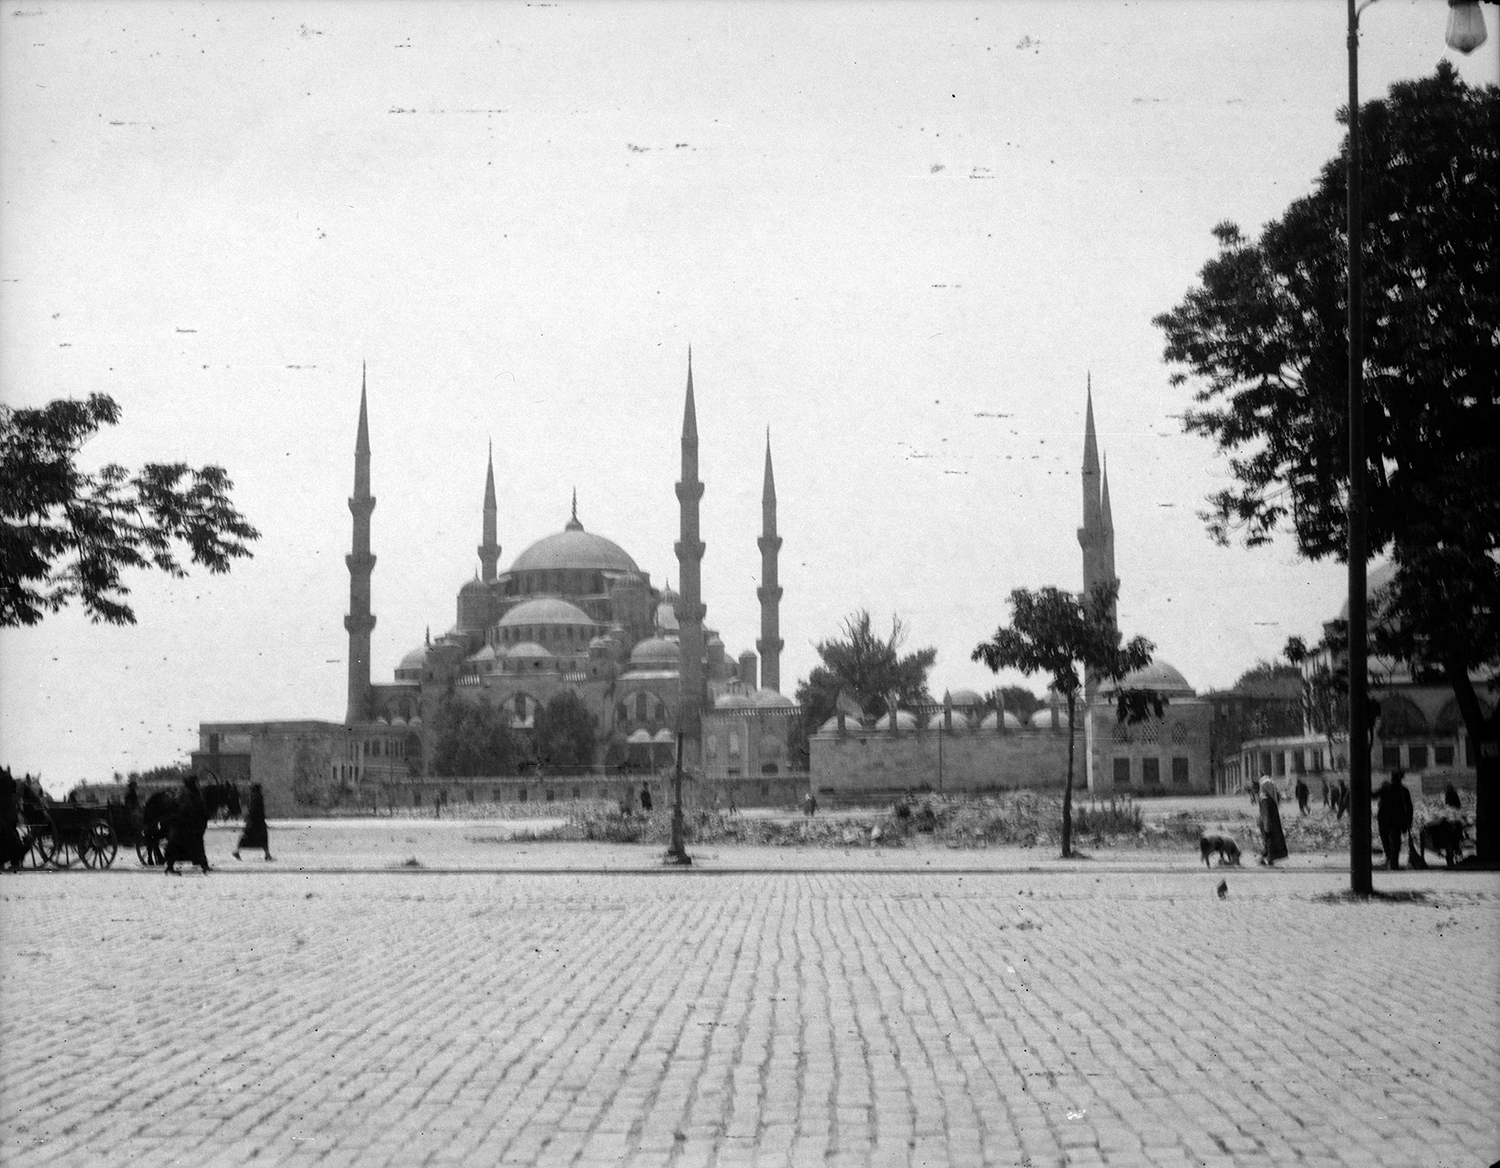 General view of Hagia Sophia